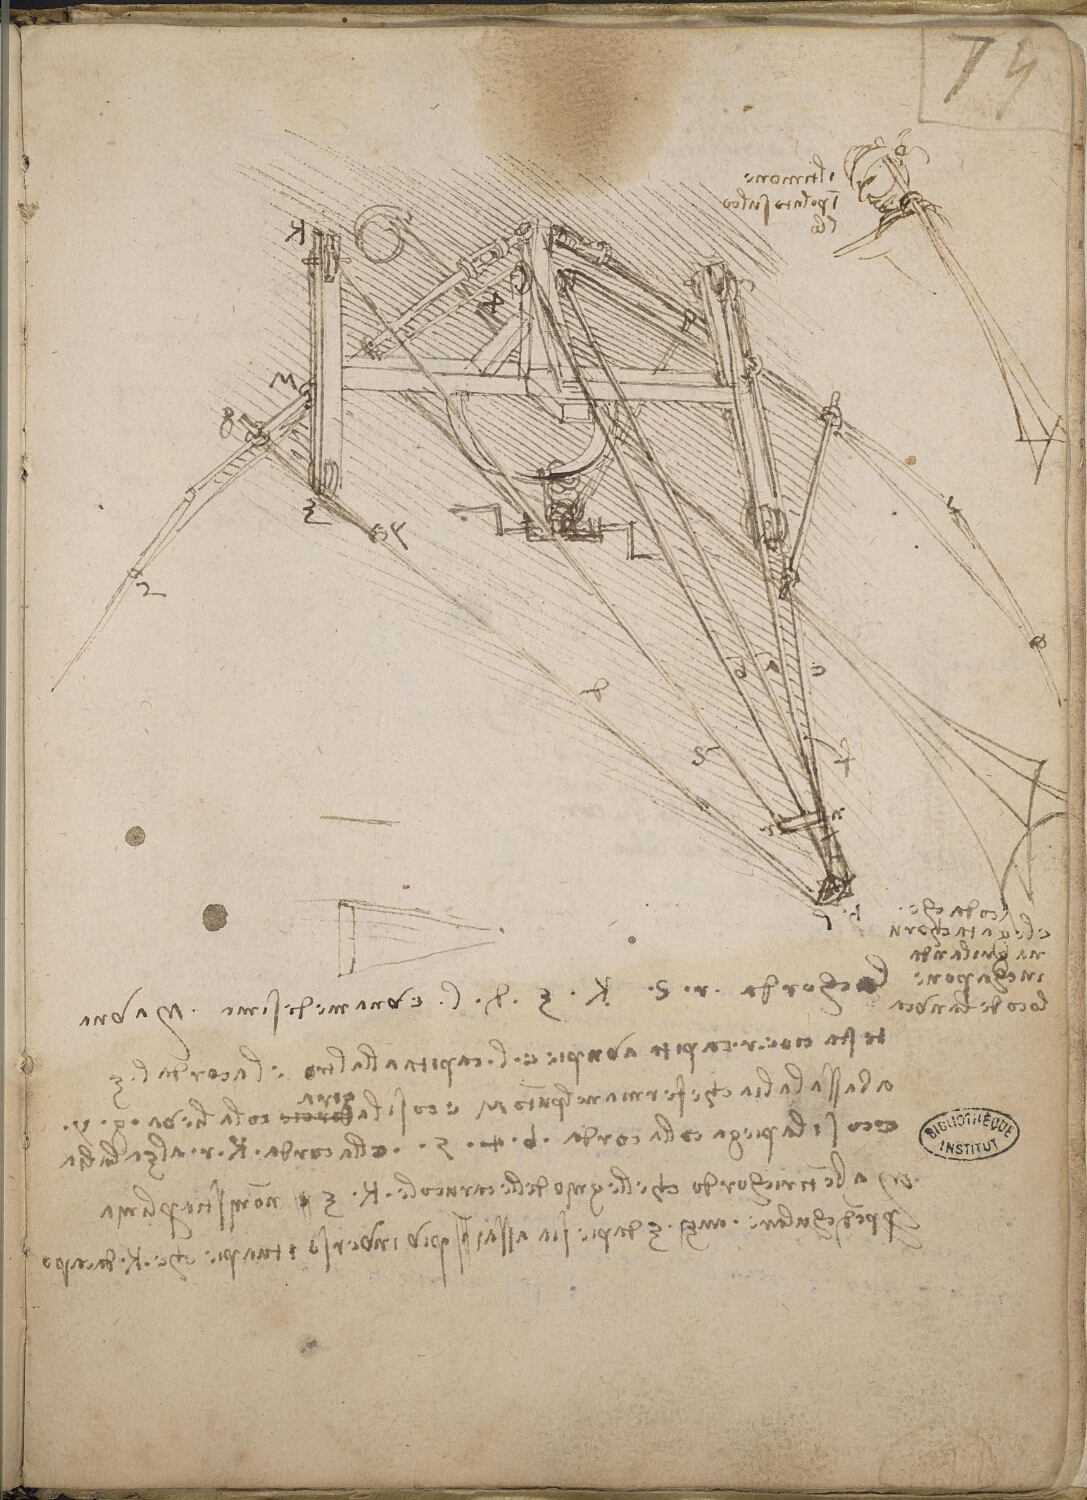 Ms 2173 (Manuscrit B), f. 74v : études de machines volantes. Ms 2173 (Manuscrit B), f. 75r : études de machines volantes.